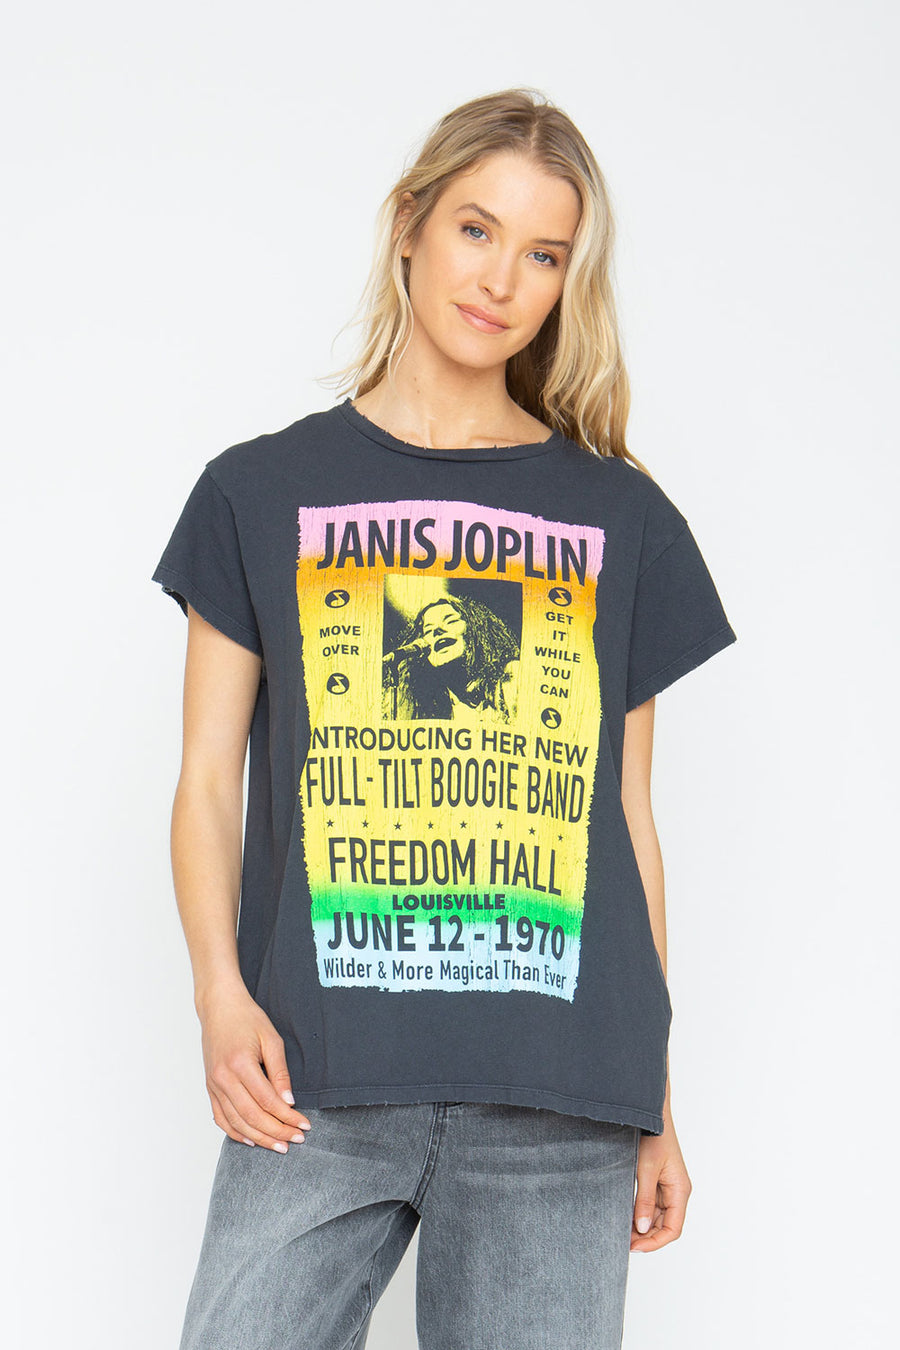 Janis Joplin "Freedom Hall" Crew Tee Womens chaserbrand